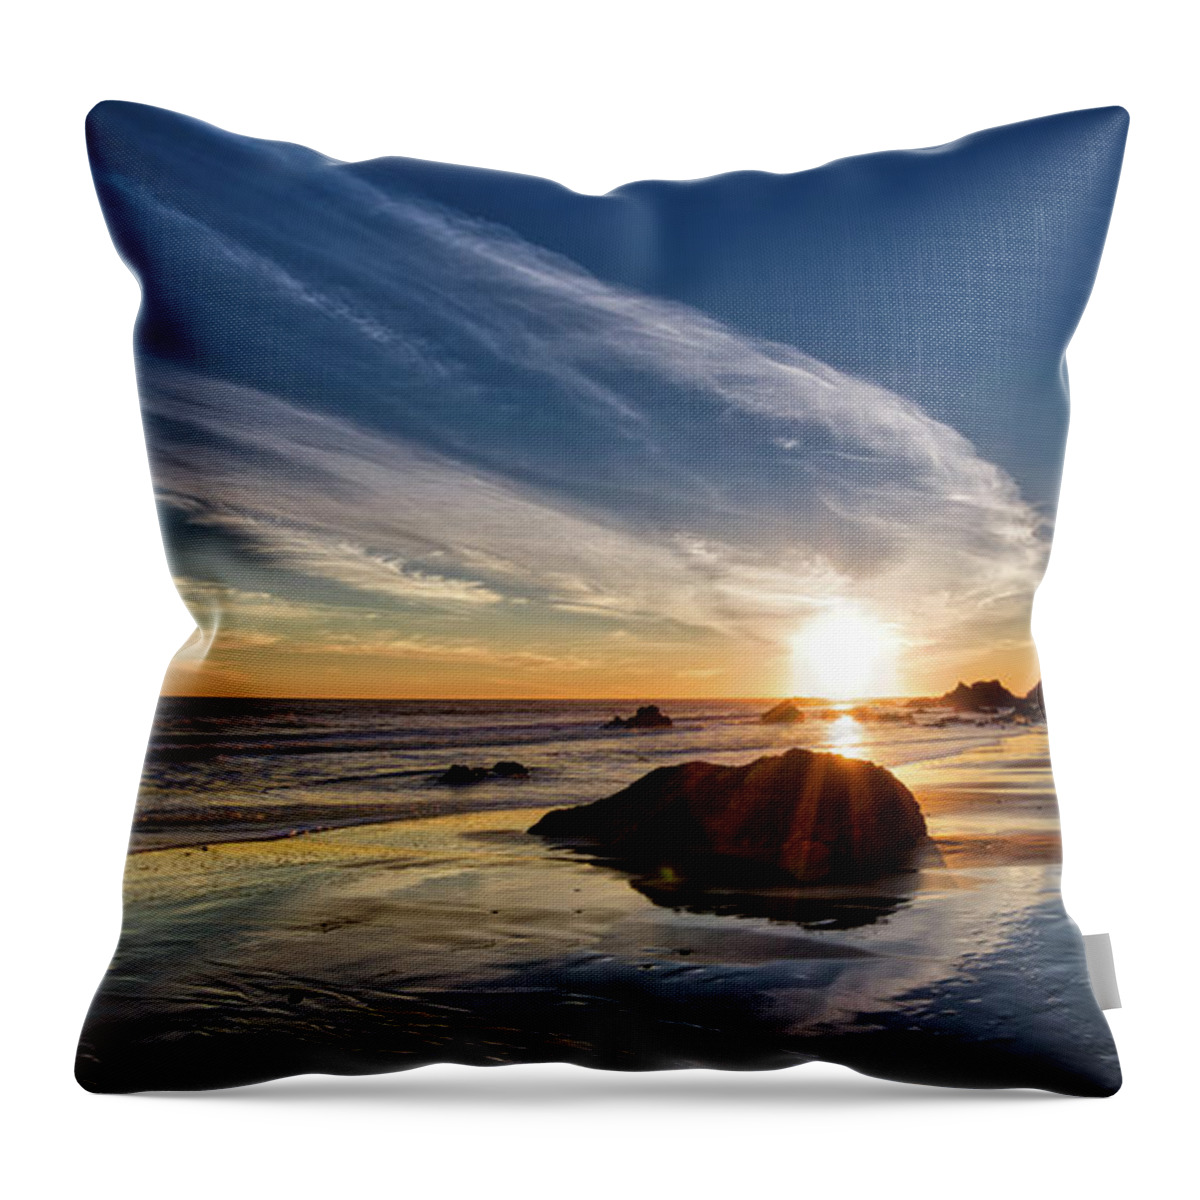 El Matador Beach Throw Pillow featuring the photograph El Matador Beach Sunset by Dean Ginther